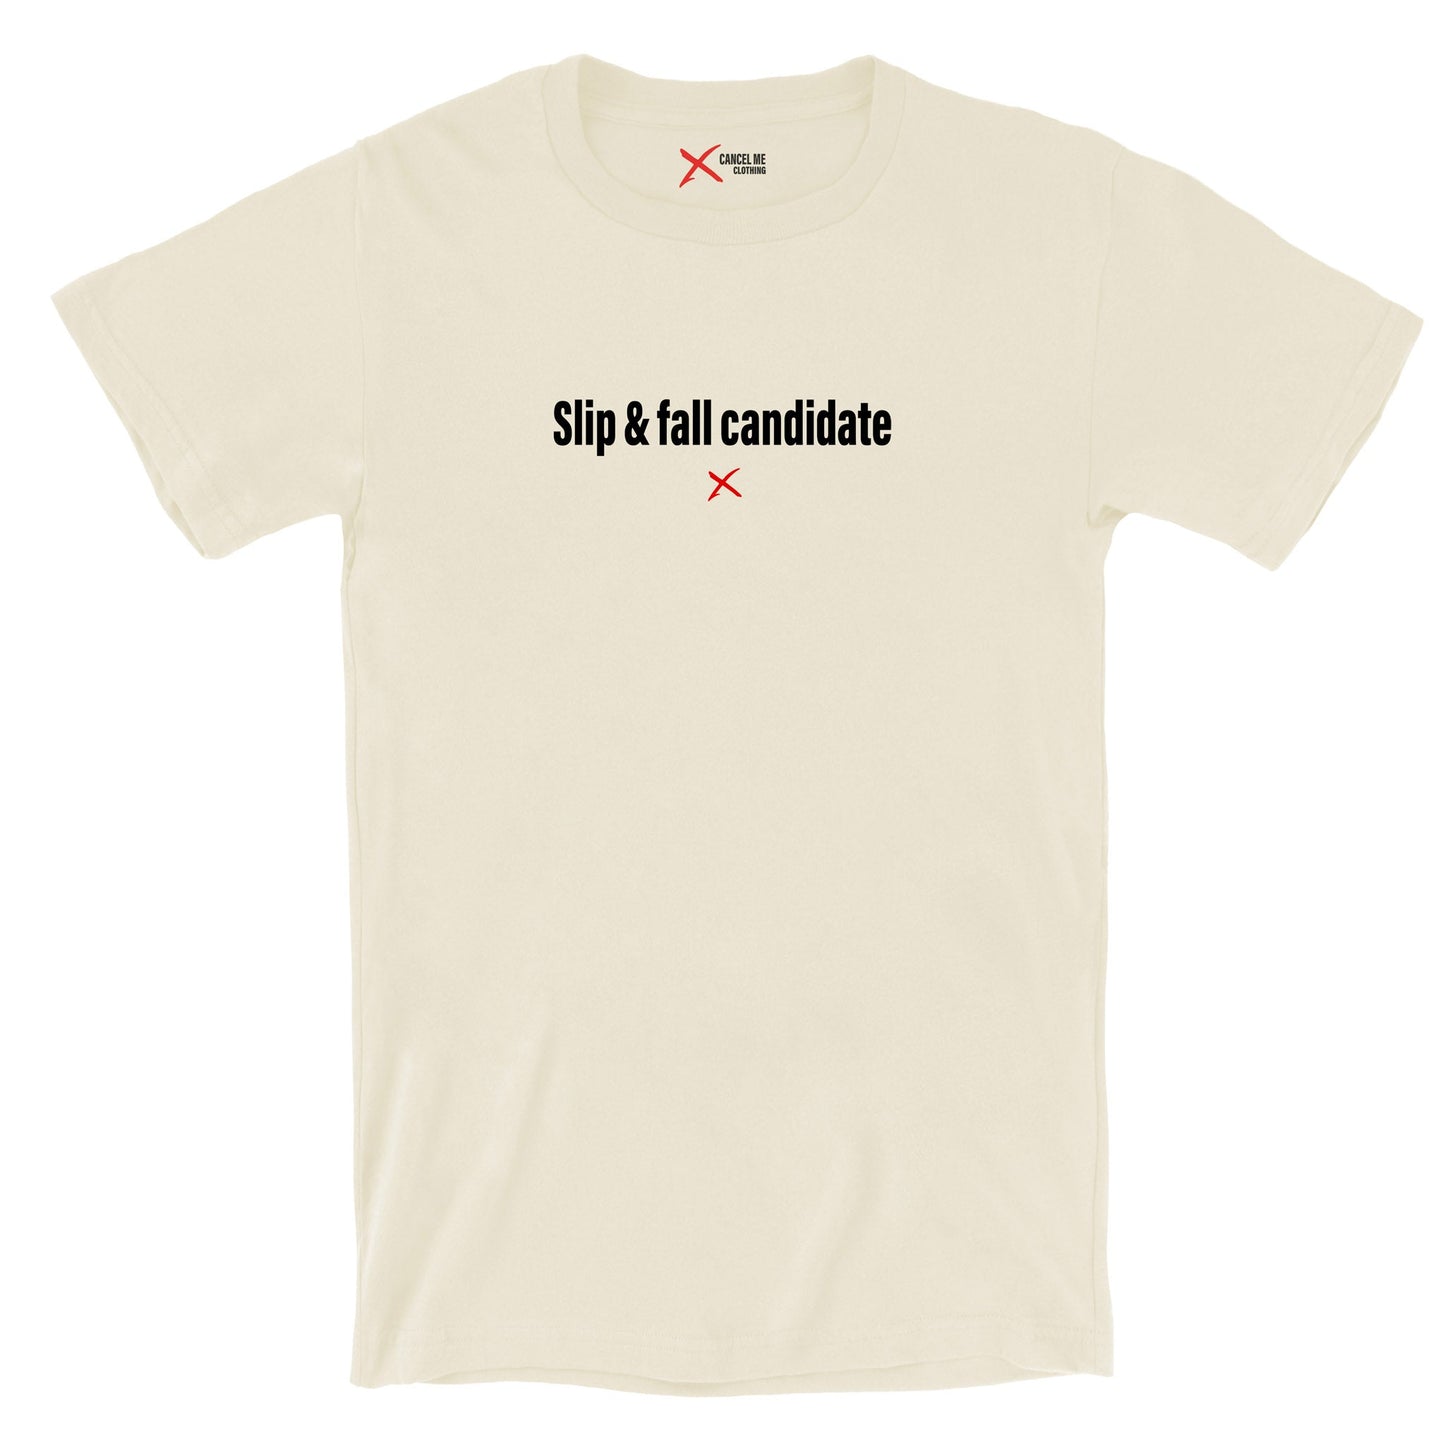 Slip & fall candidate - Shirt